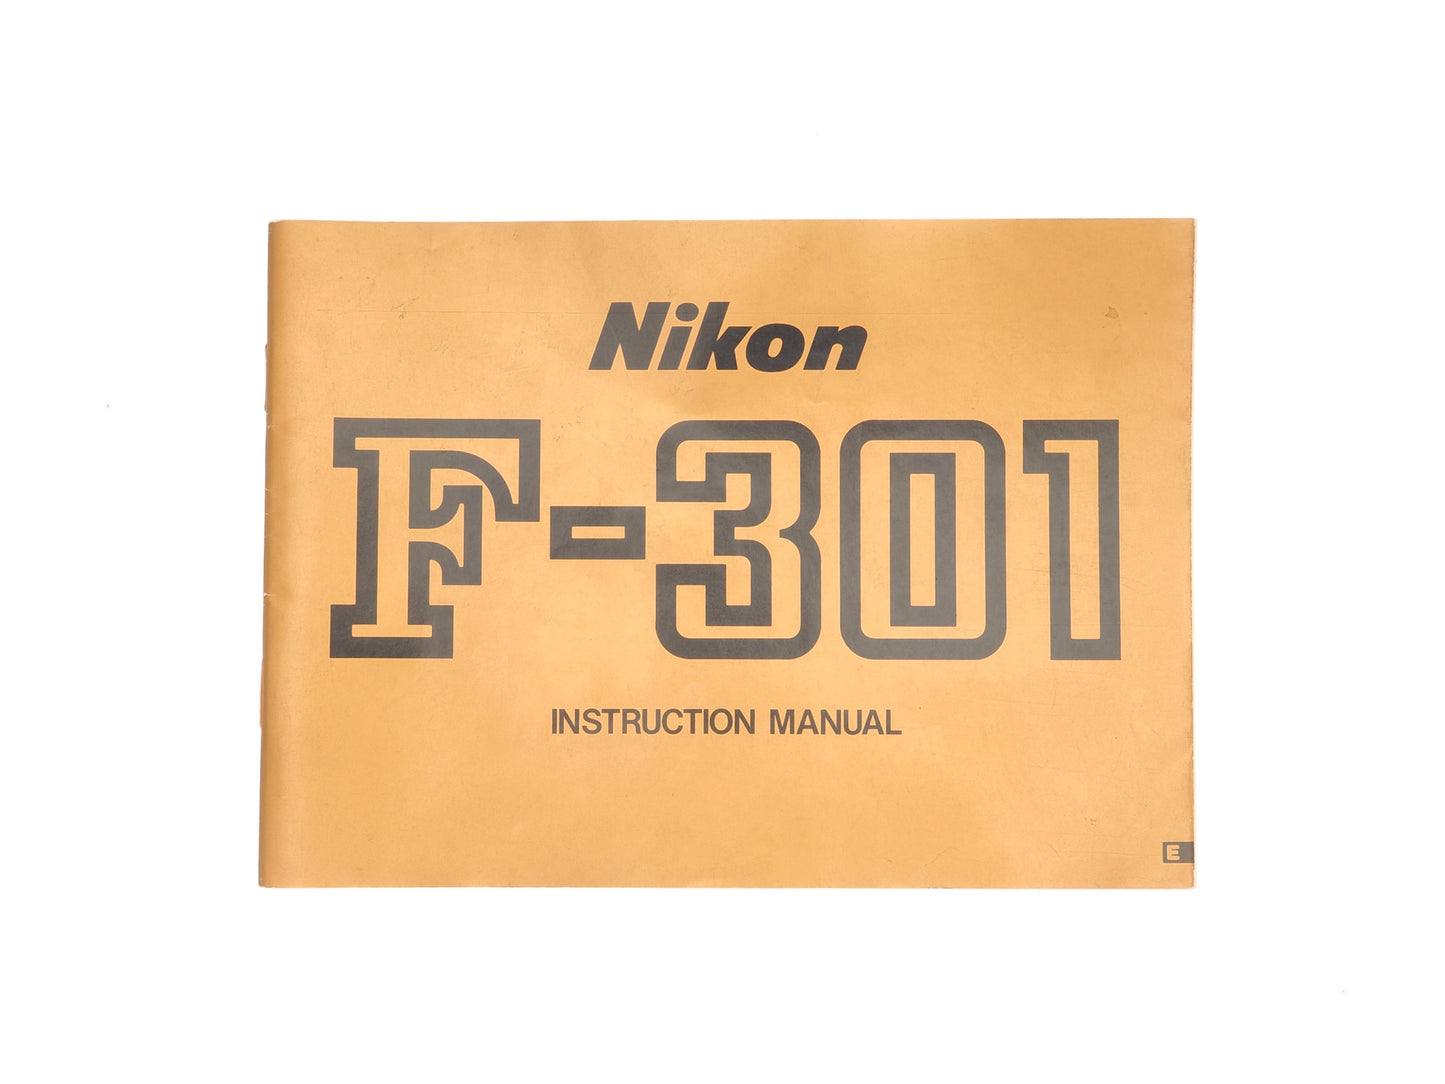 Nikon F-301 Instruction Manual - Accessory